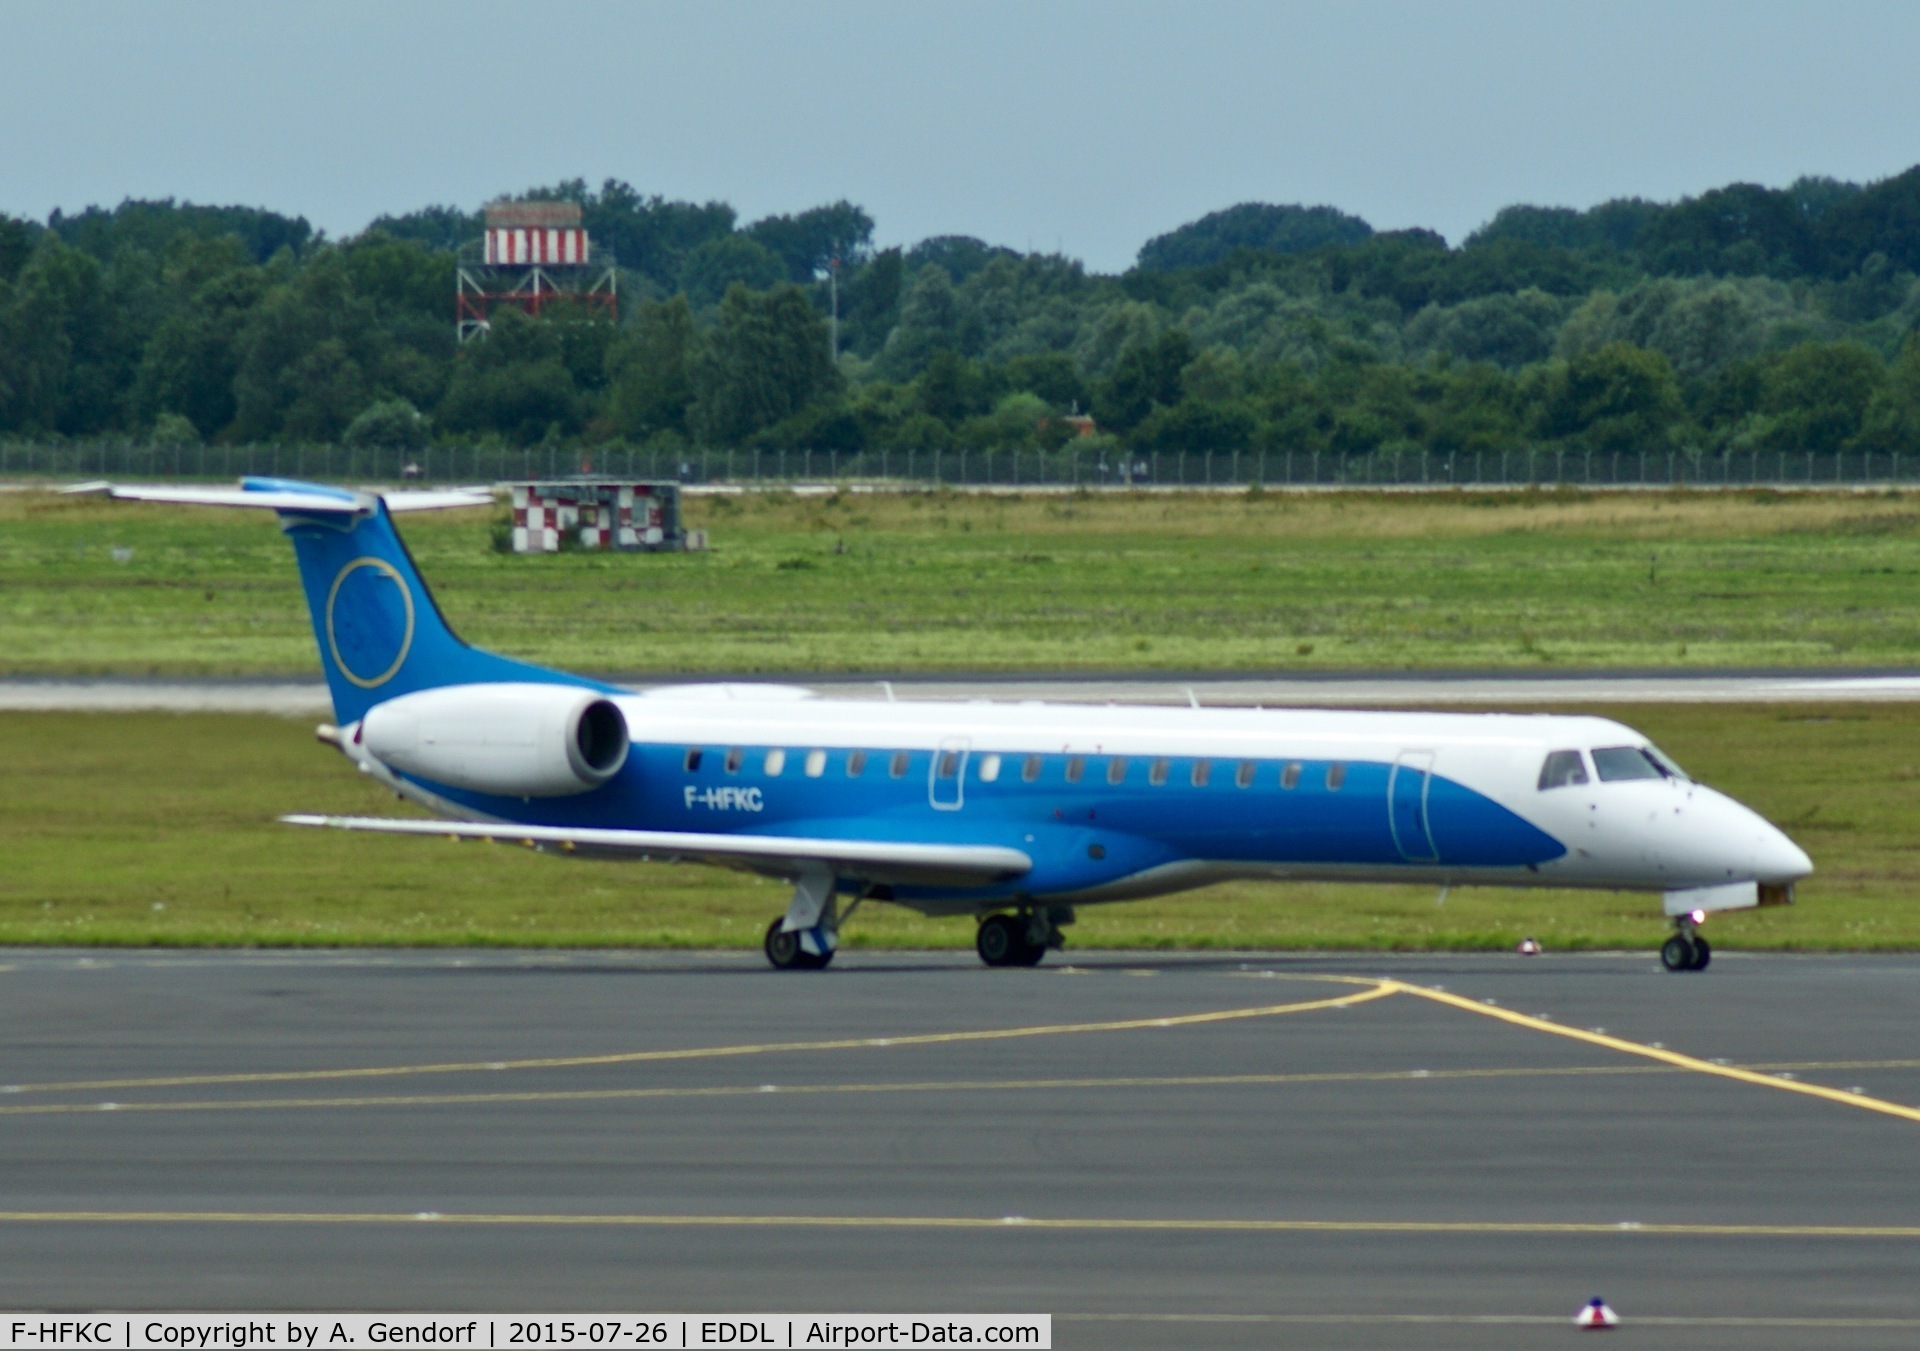 F-HFKC, 2000 Embraer ERJ-145LR (EMB-145LR) C/N 145282, Enhance Aero Group (untitled), is here on taxiway 